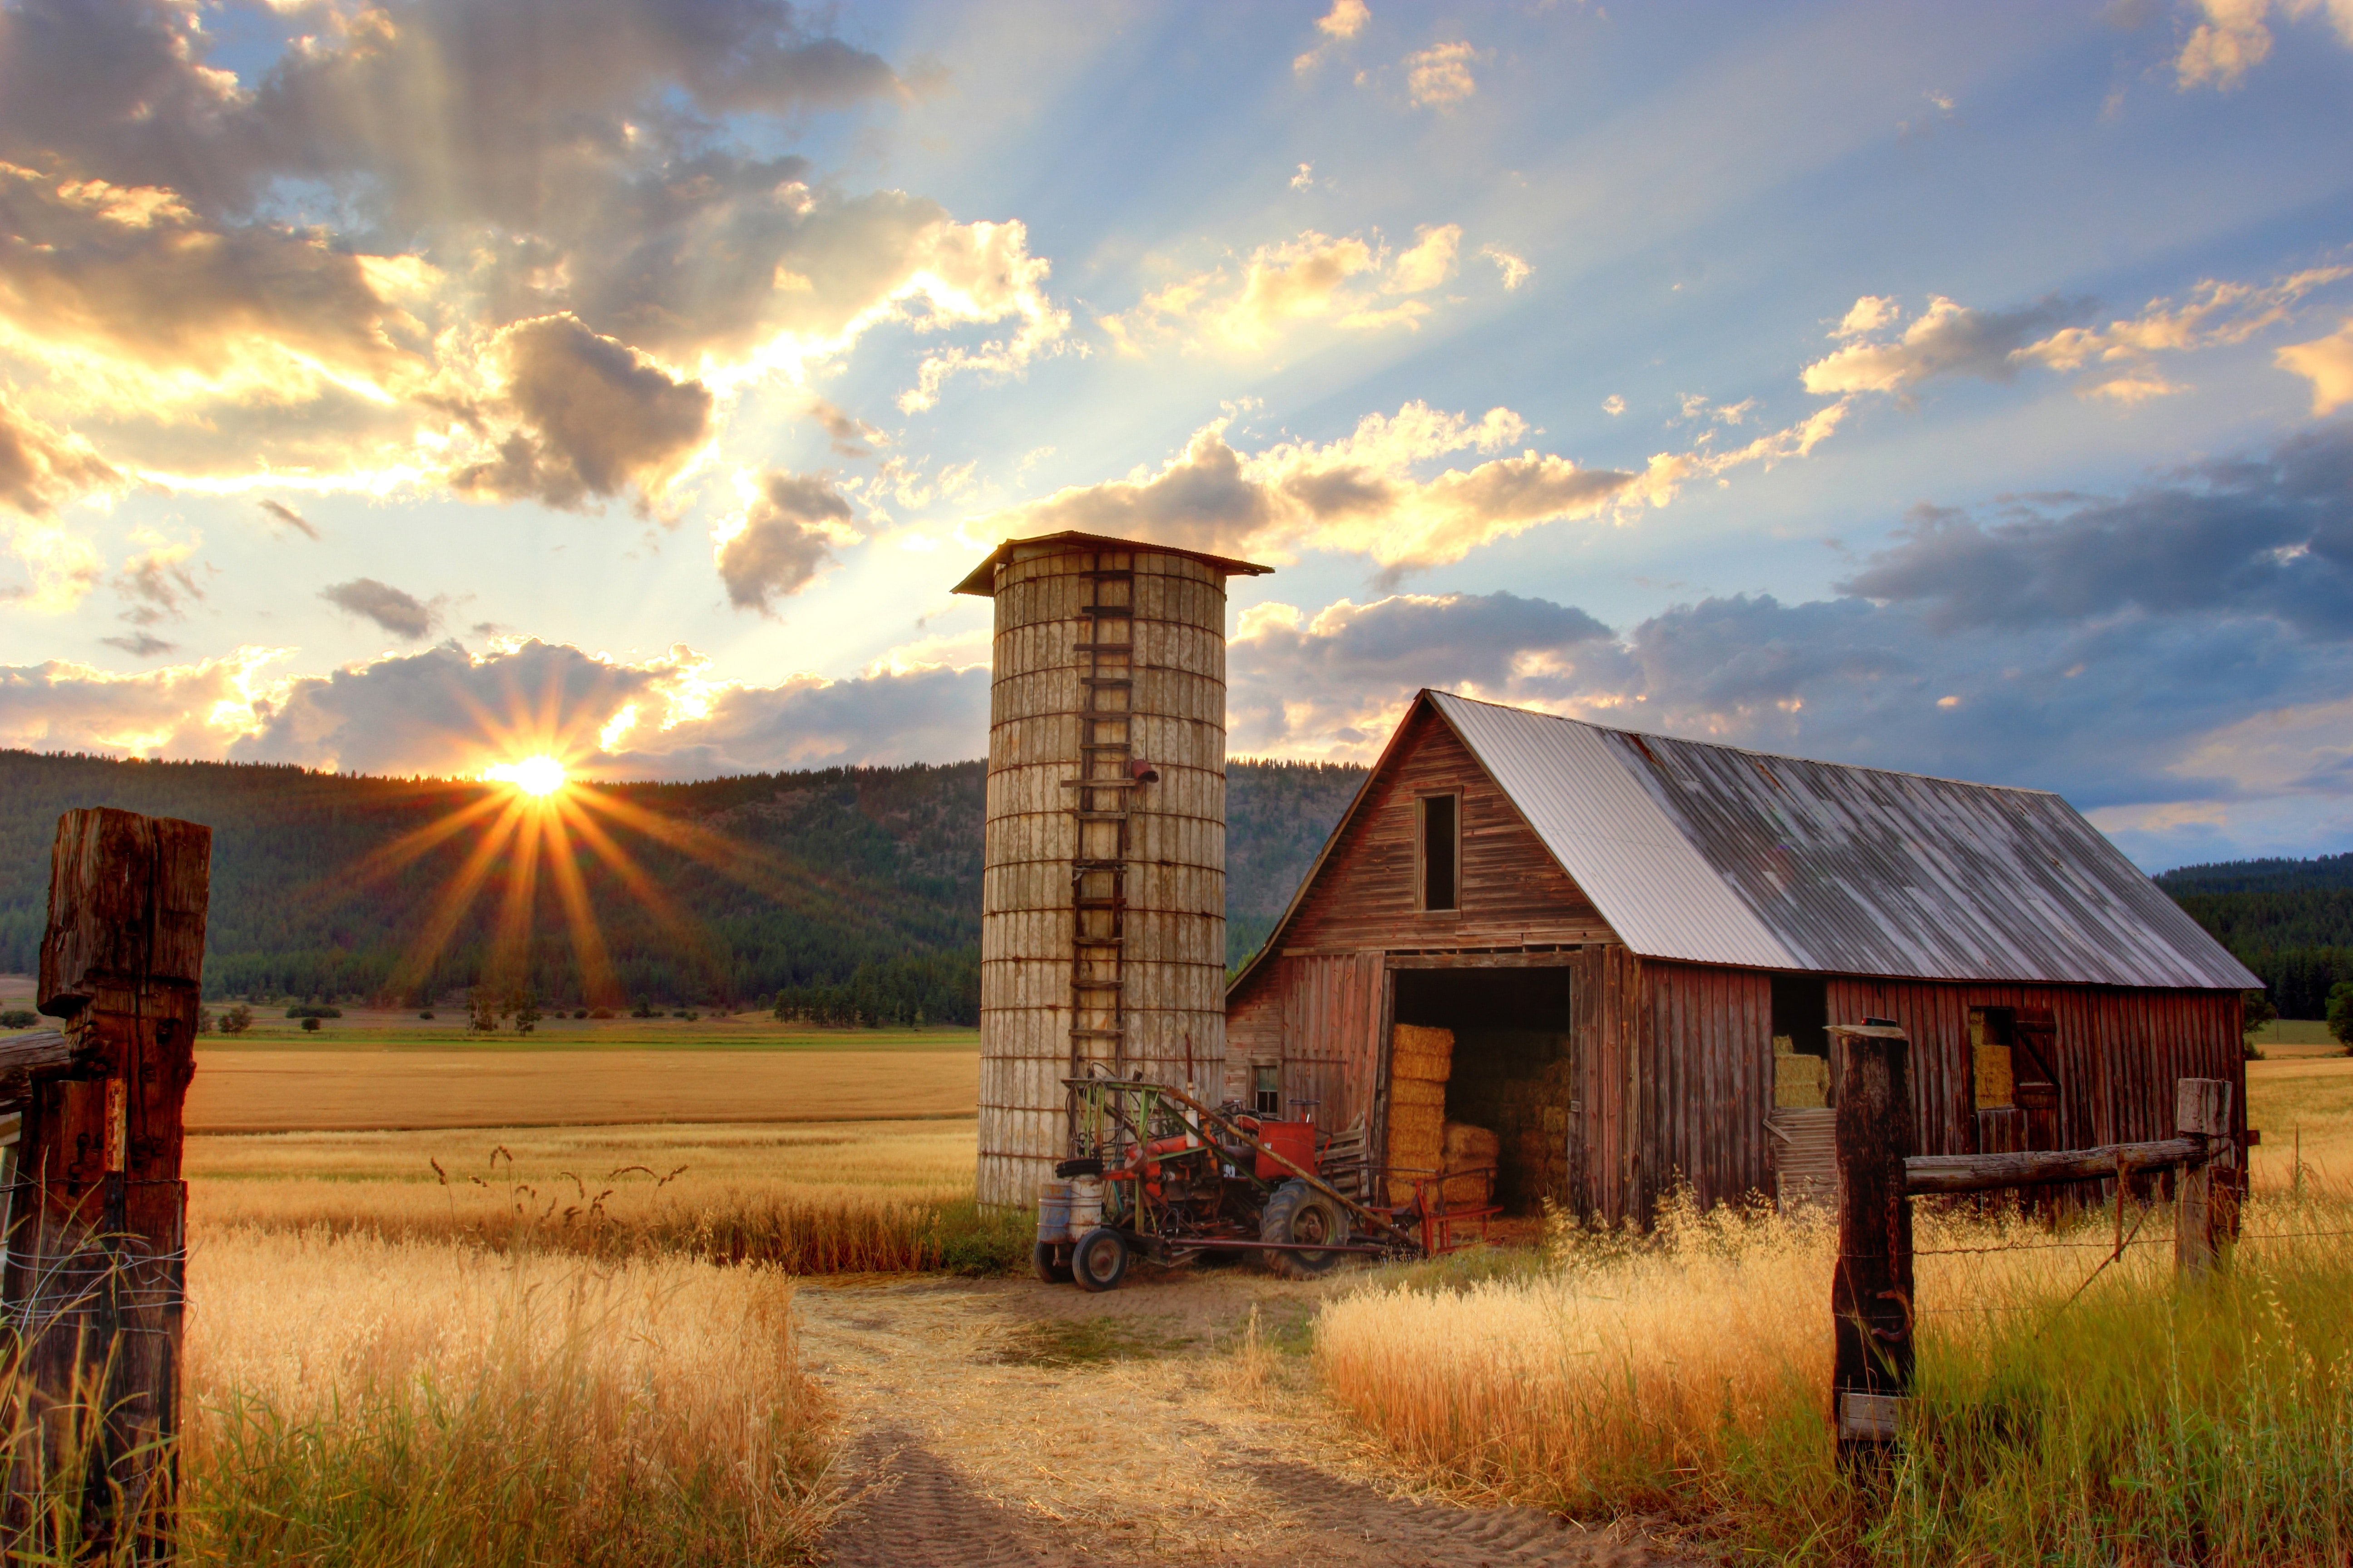 A farm barn | Source: Unsplash.com